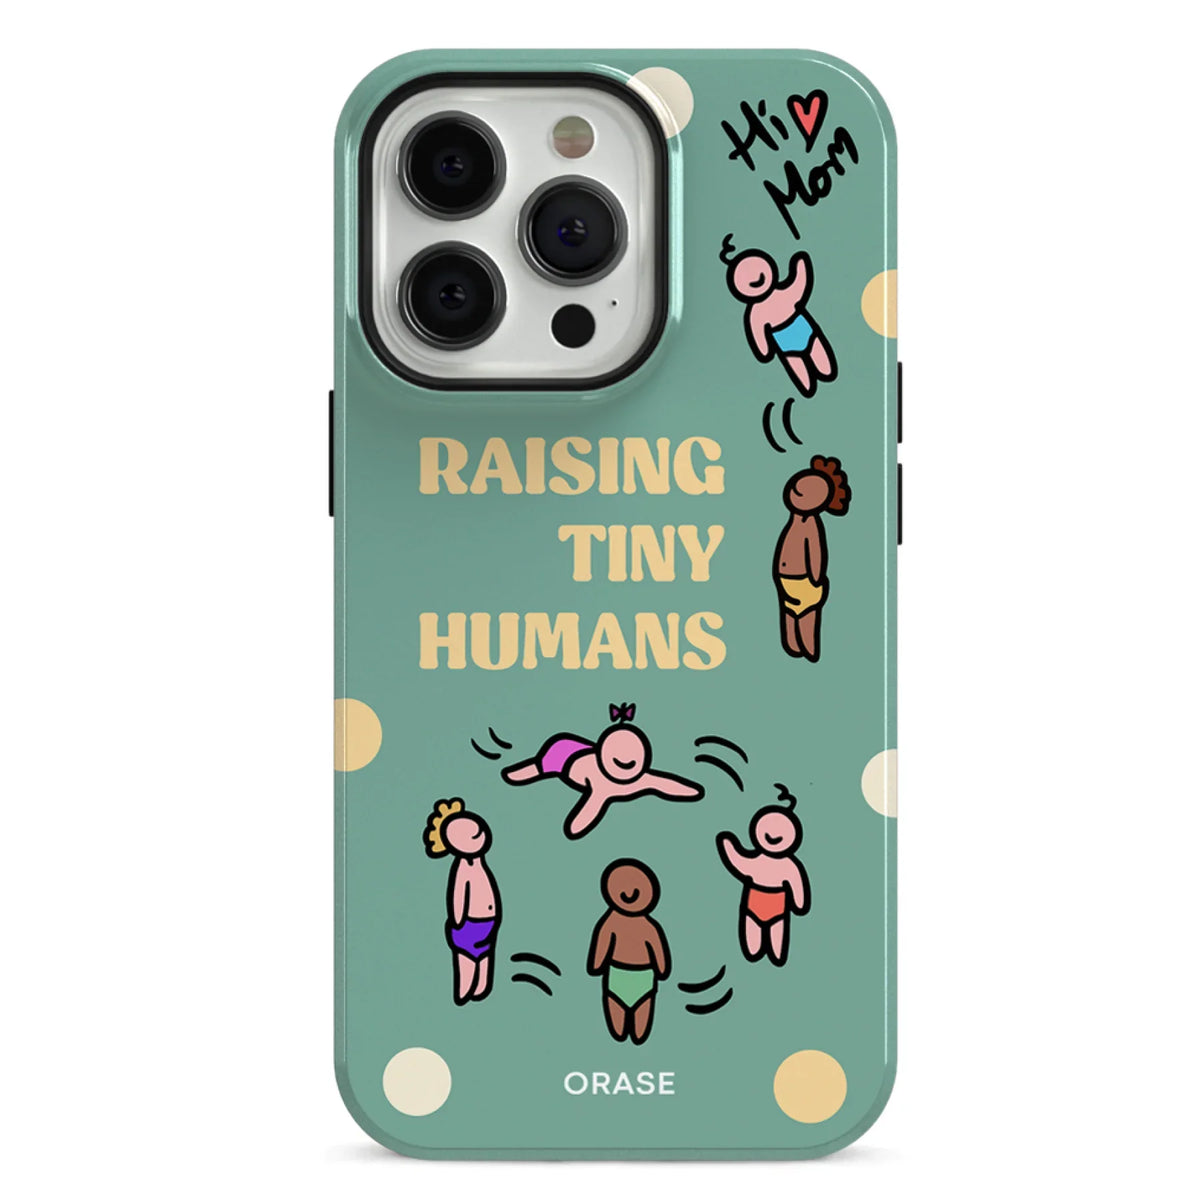 Tiny Humans iPhone Case